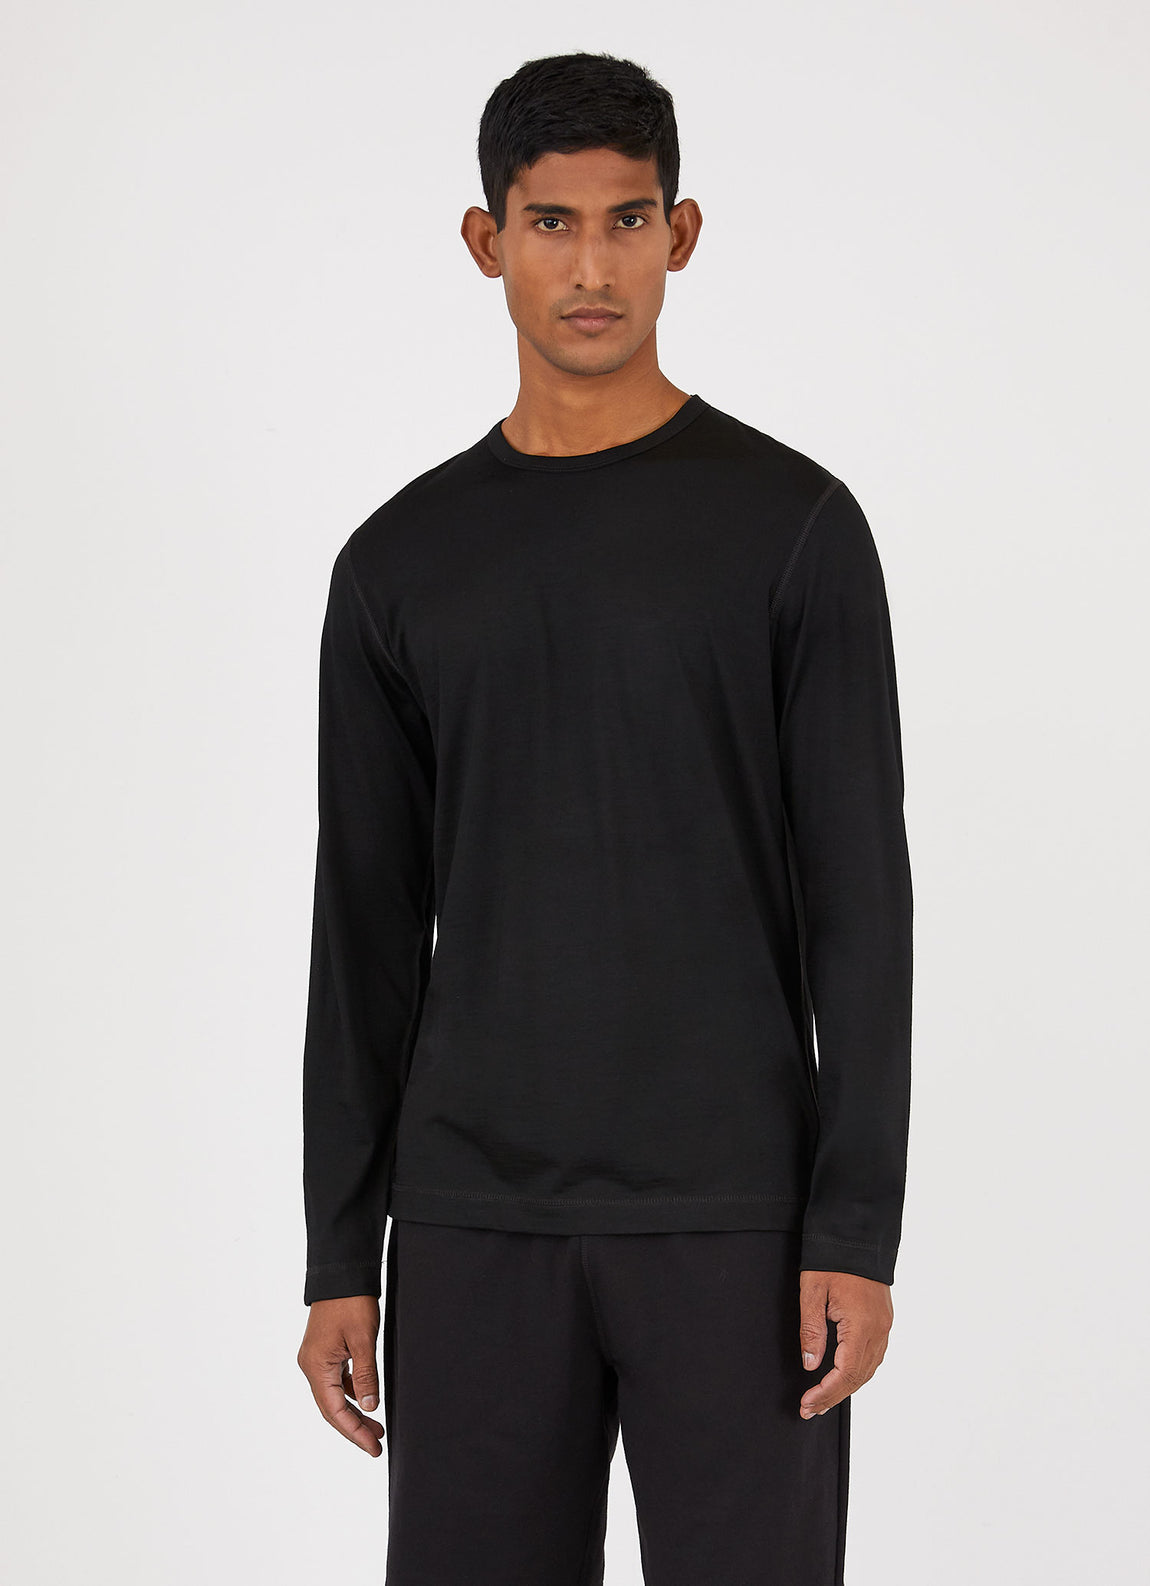 Men's Merino Long Sleeve Base Layer in Black